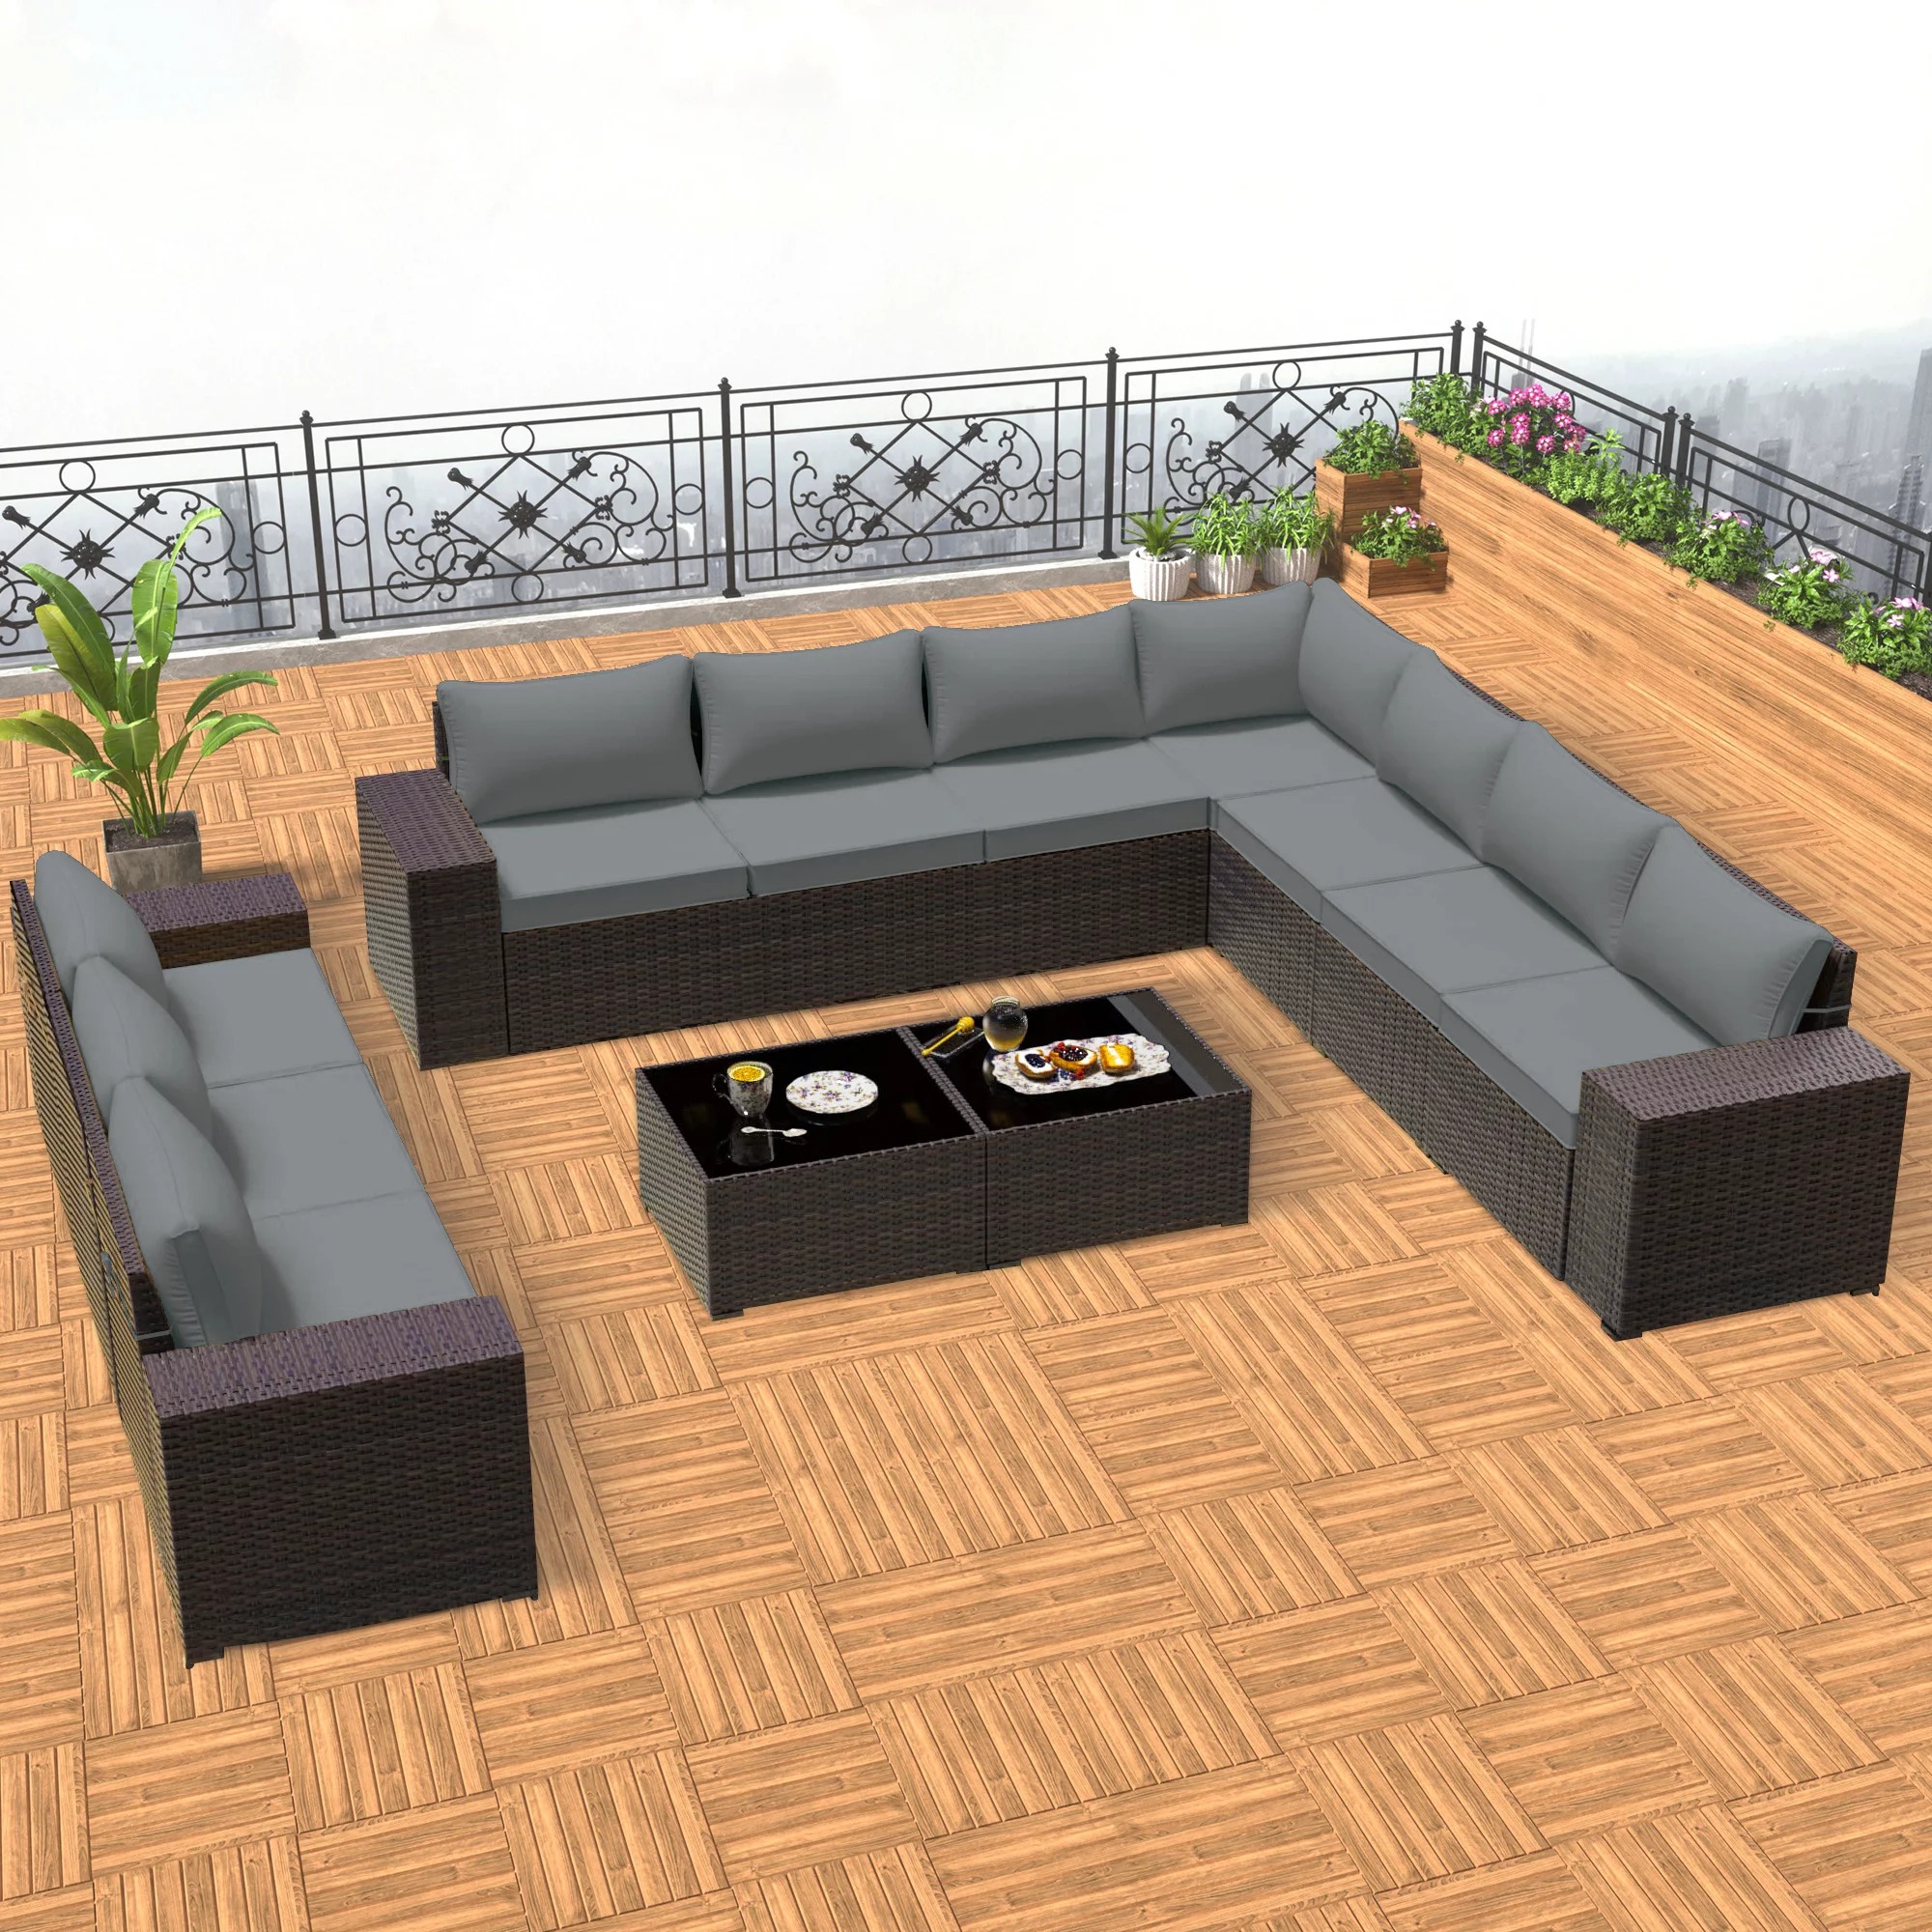 LOCCUS 10-Seater Sofa Patio Outdoor Furniture Sets {Dark Brown&Grey}